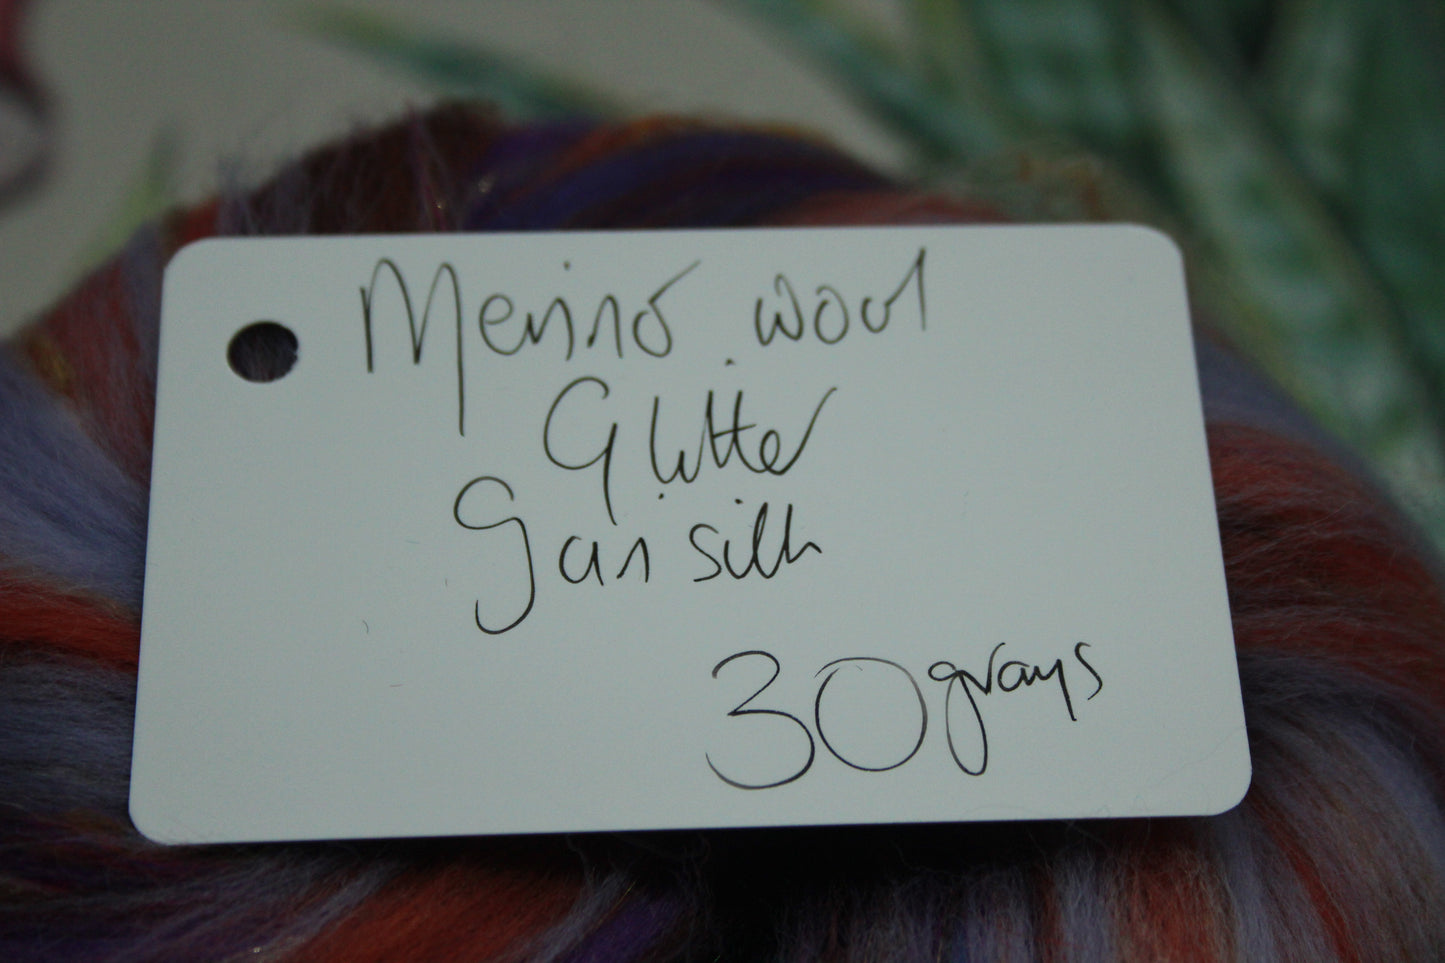 Wool Blend - Purple Brown - 30 grams / 1 oz  - Fibre for felting, weaving or spinning